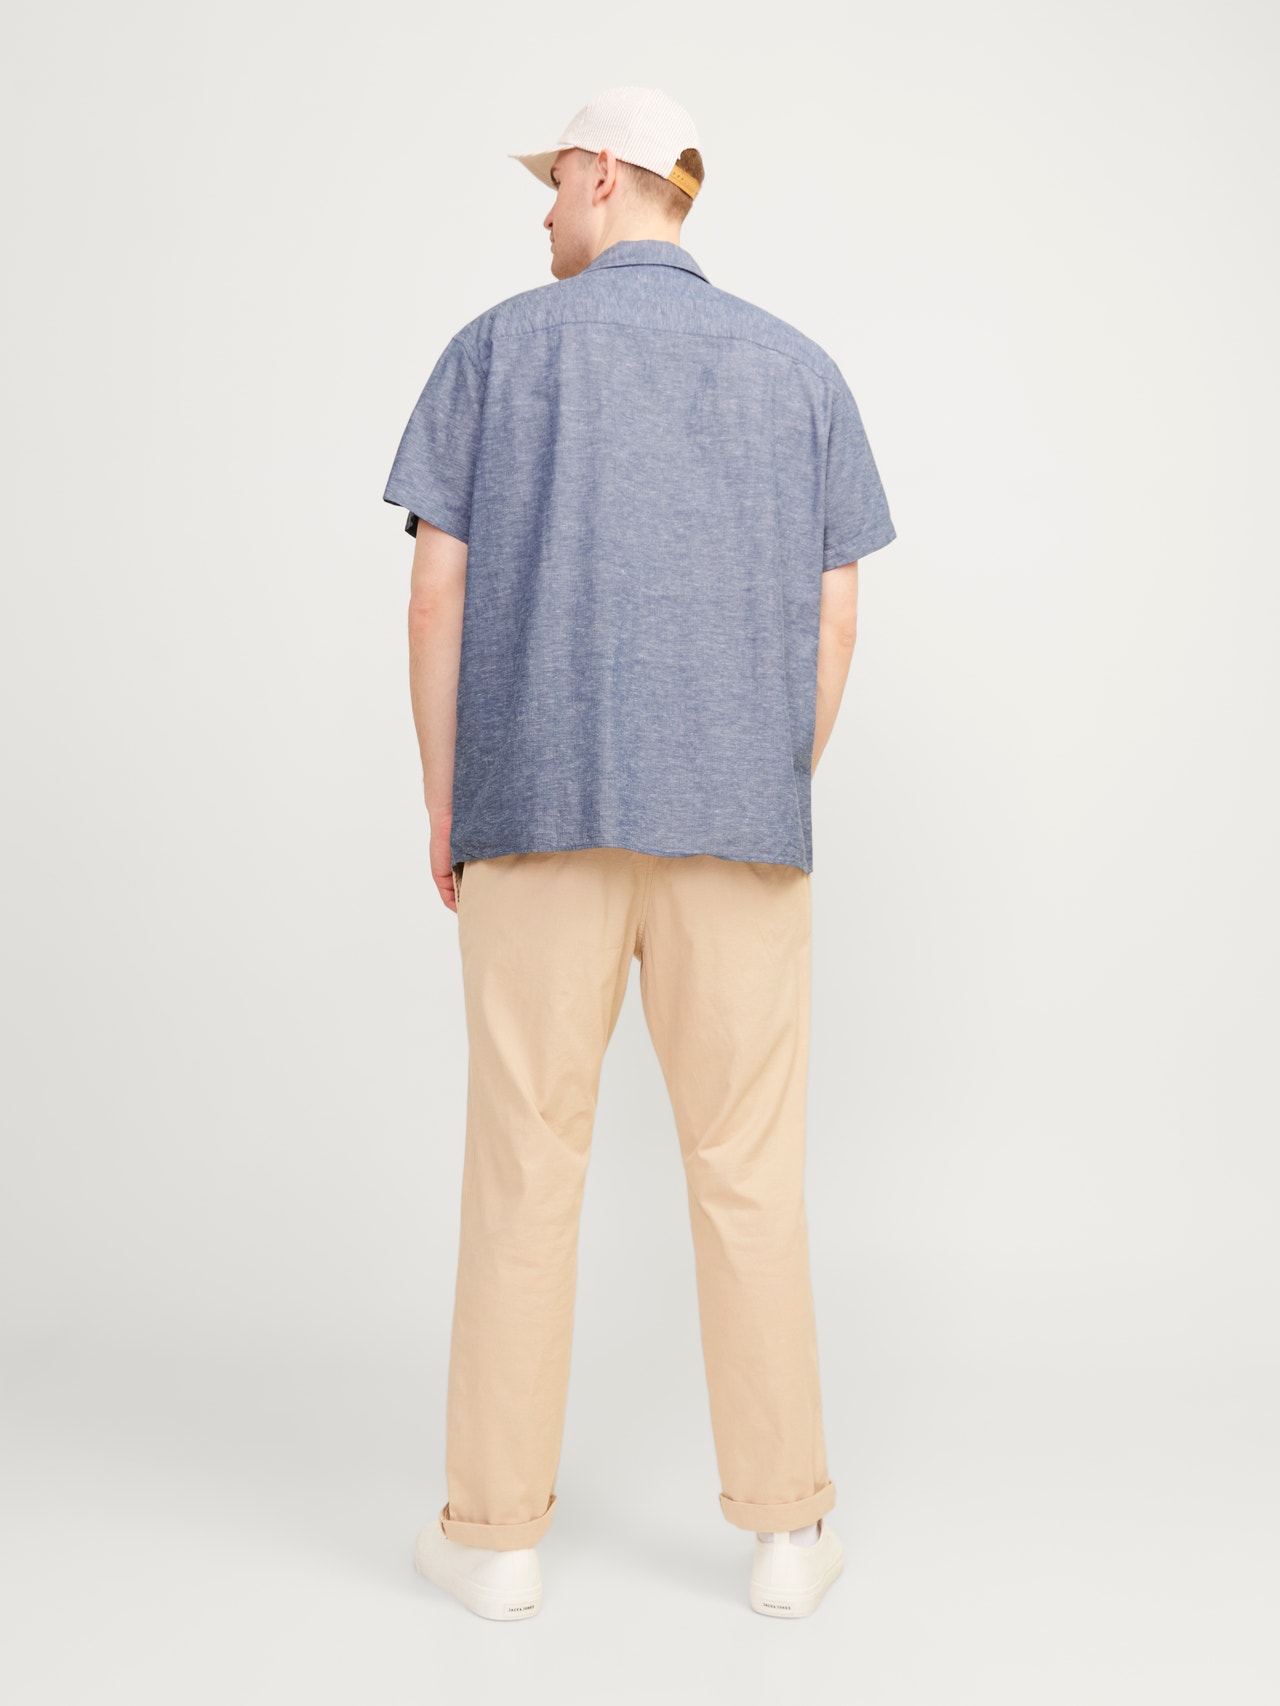 Jack & Jones Plus Size Camicia Slim Fit -Faded Denim - 12250653